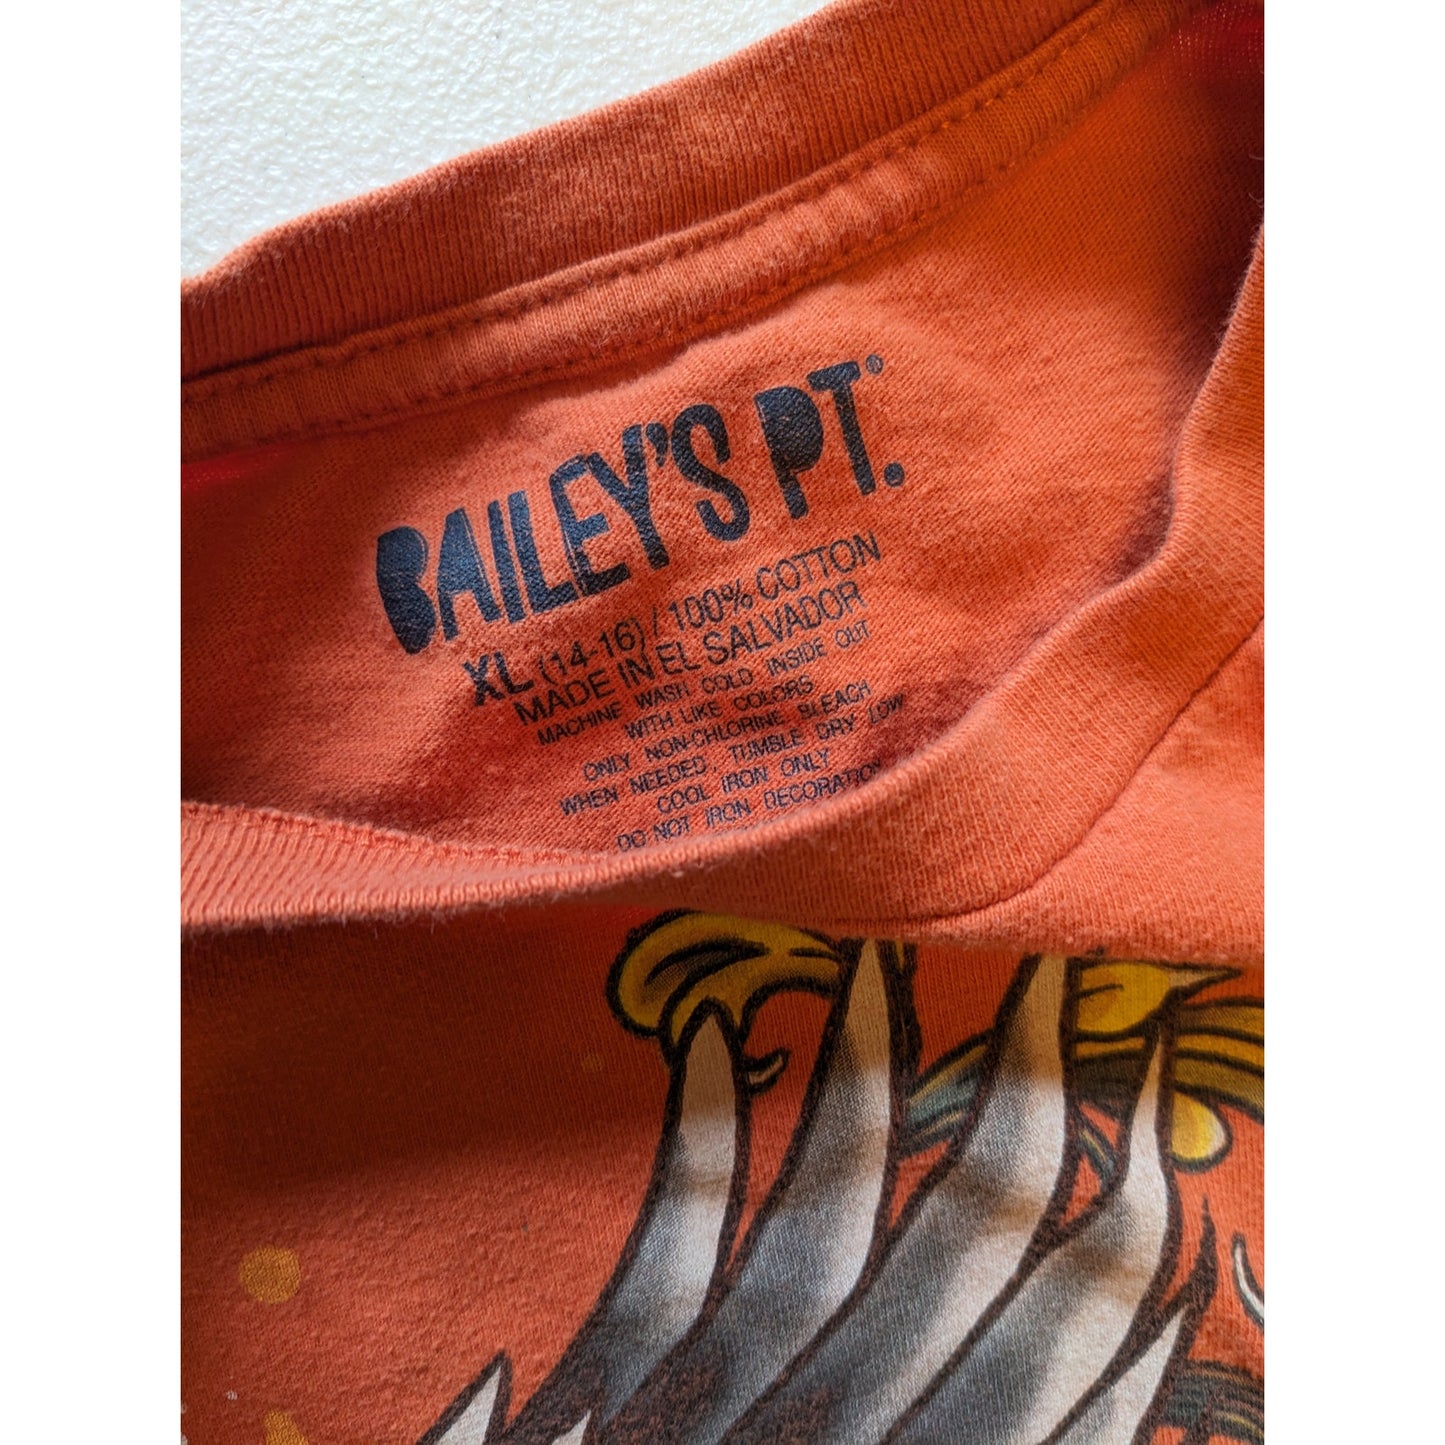 Baileys PT Shirt Youth XL Short Sleeve Graphic Tee Eagle Snake Skull Streetwear